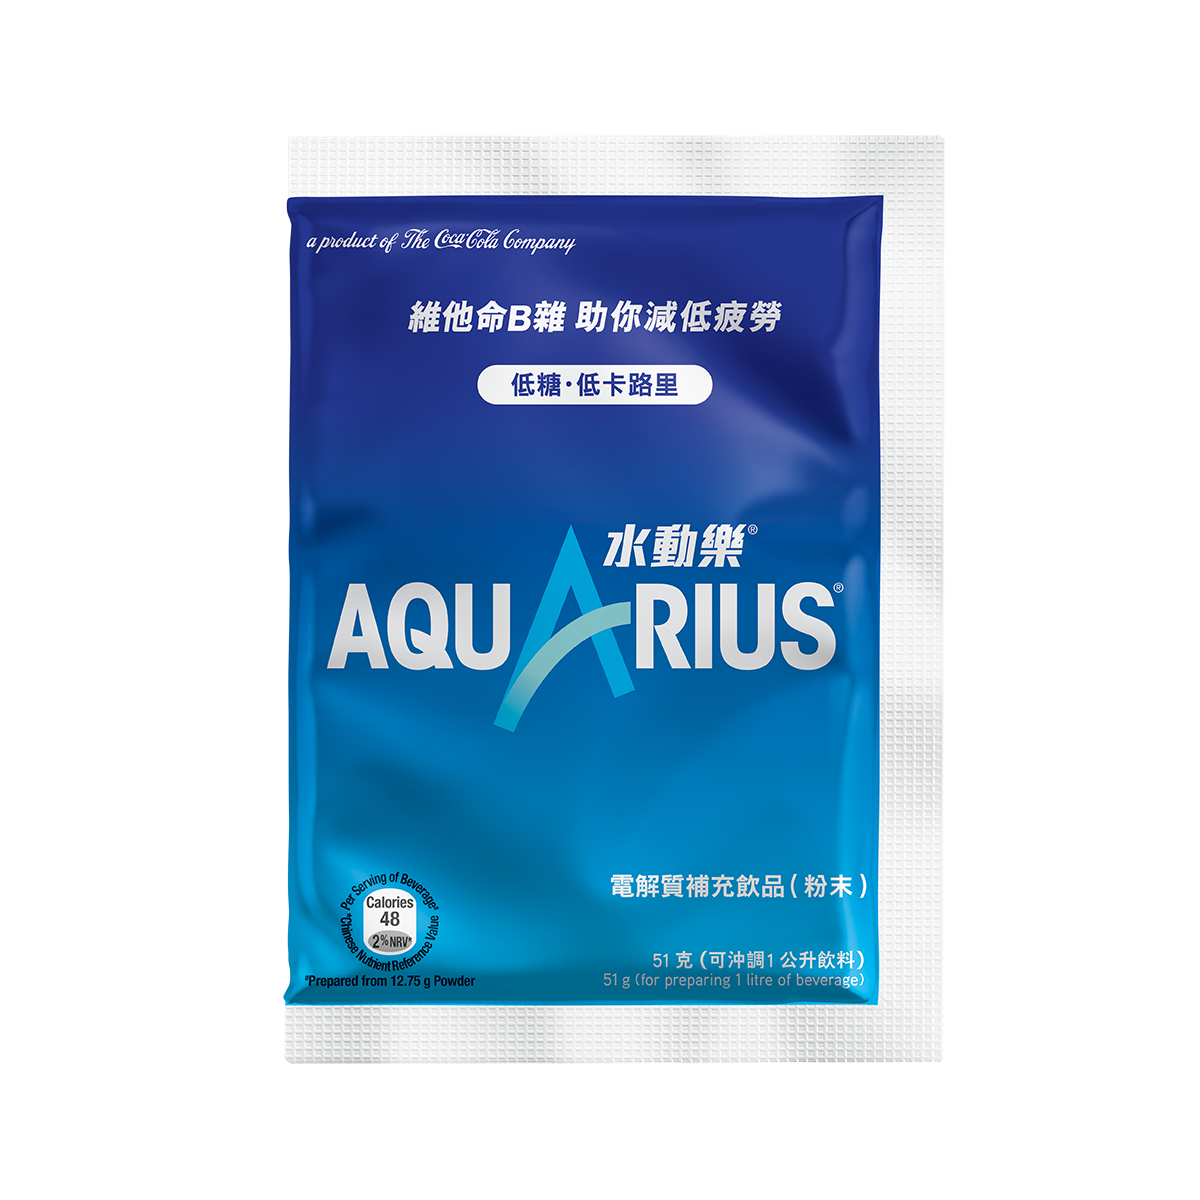 Aquarius® Electrolytes Replenishment Drink (Powder) packaging